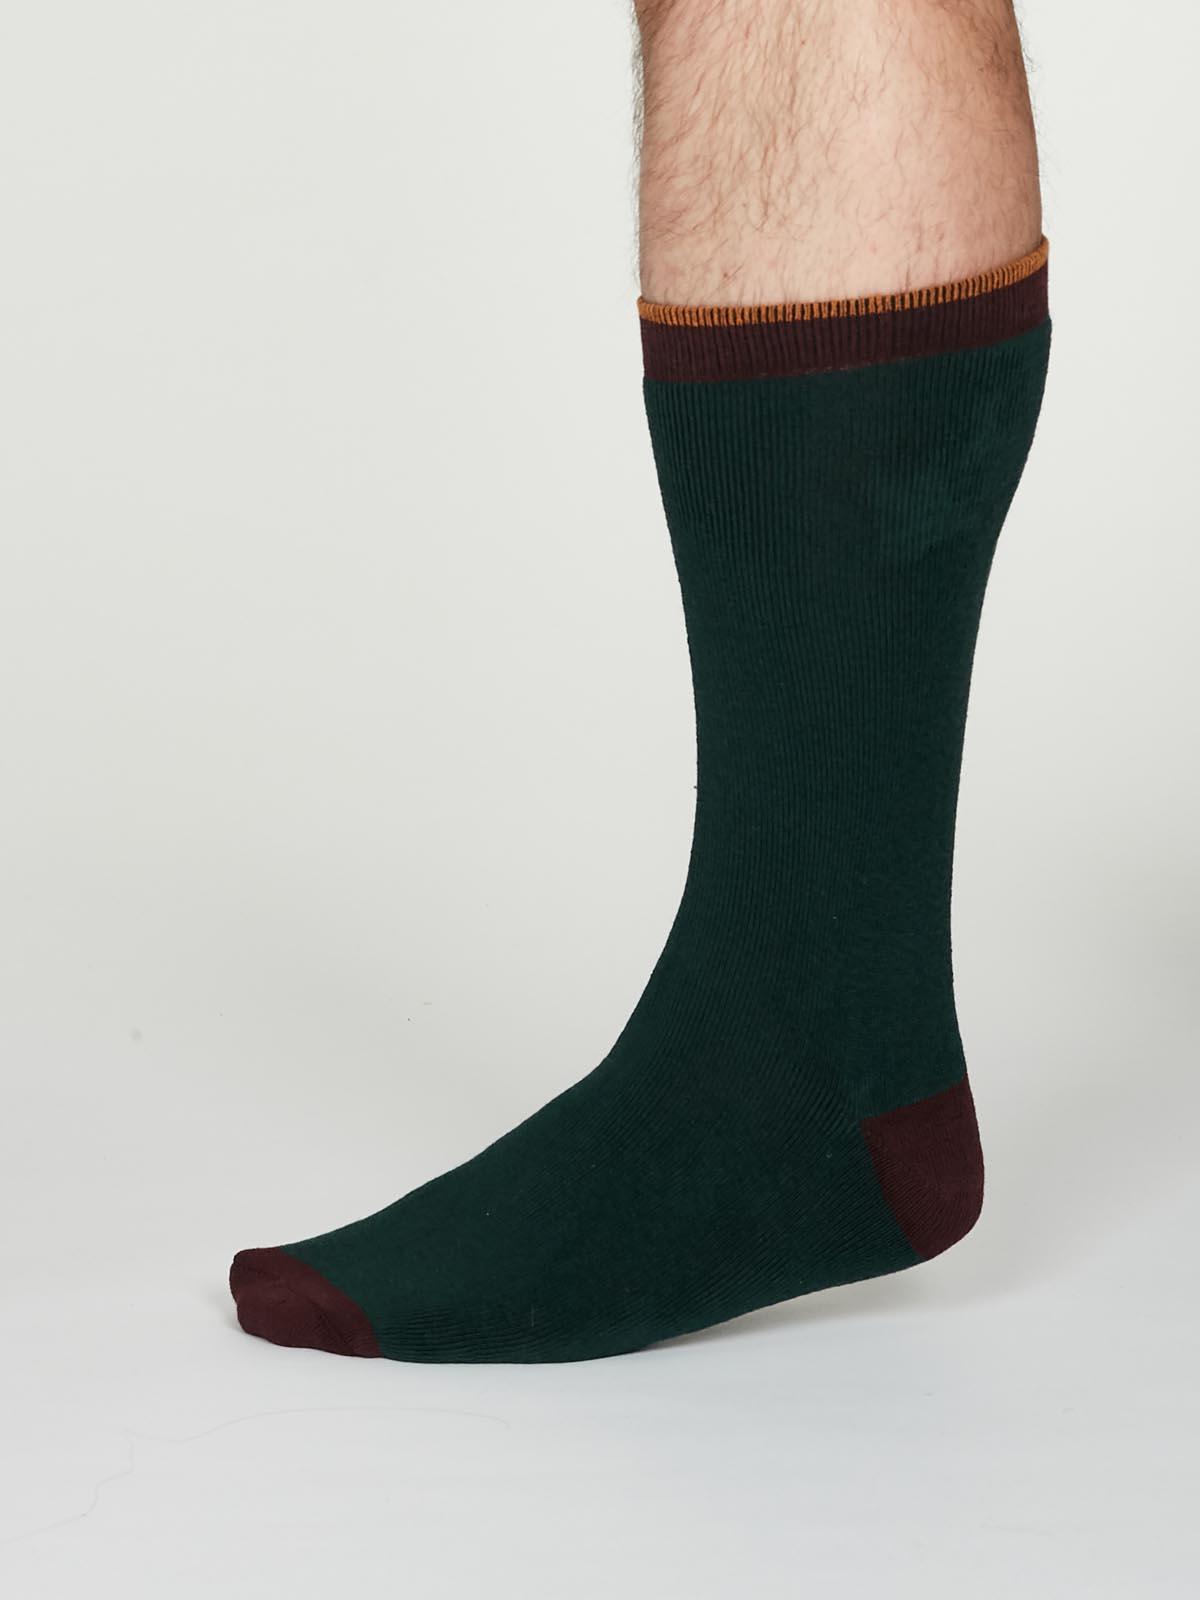 Walker Socks - Forest - Thought Clothing UK